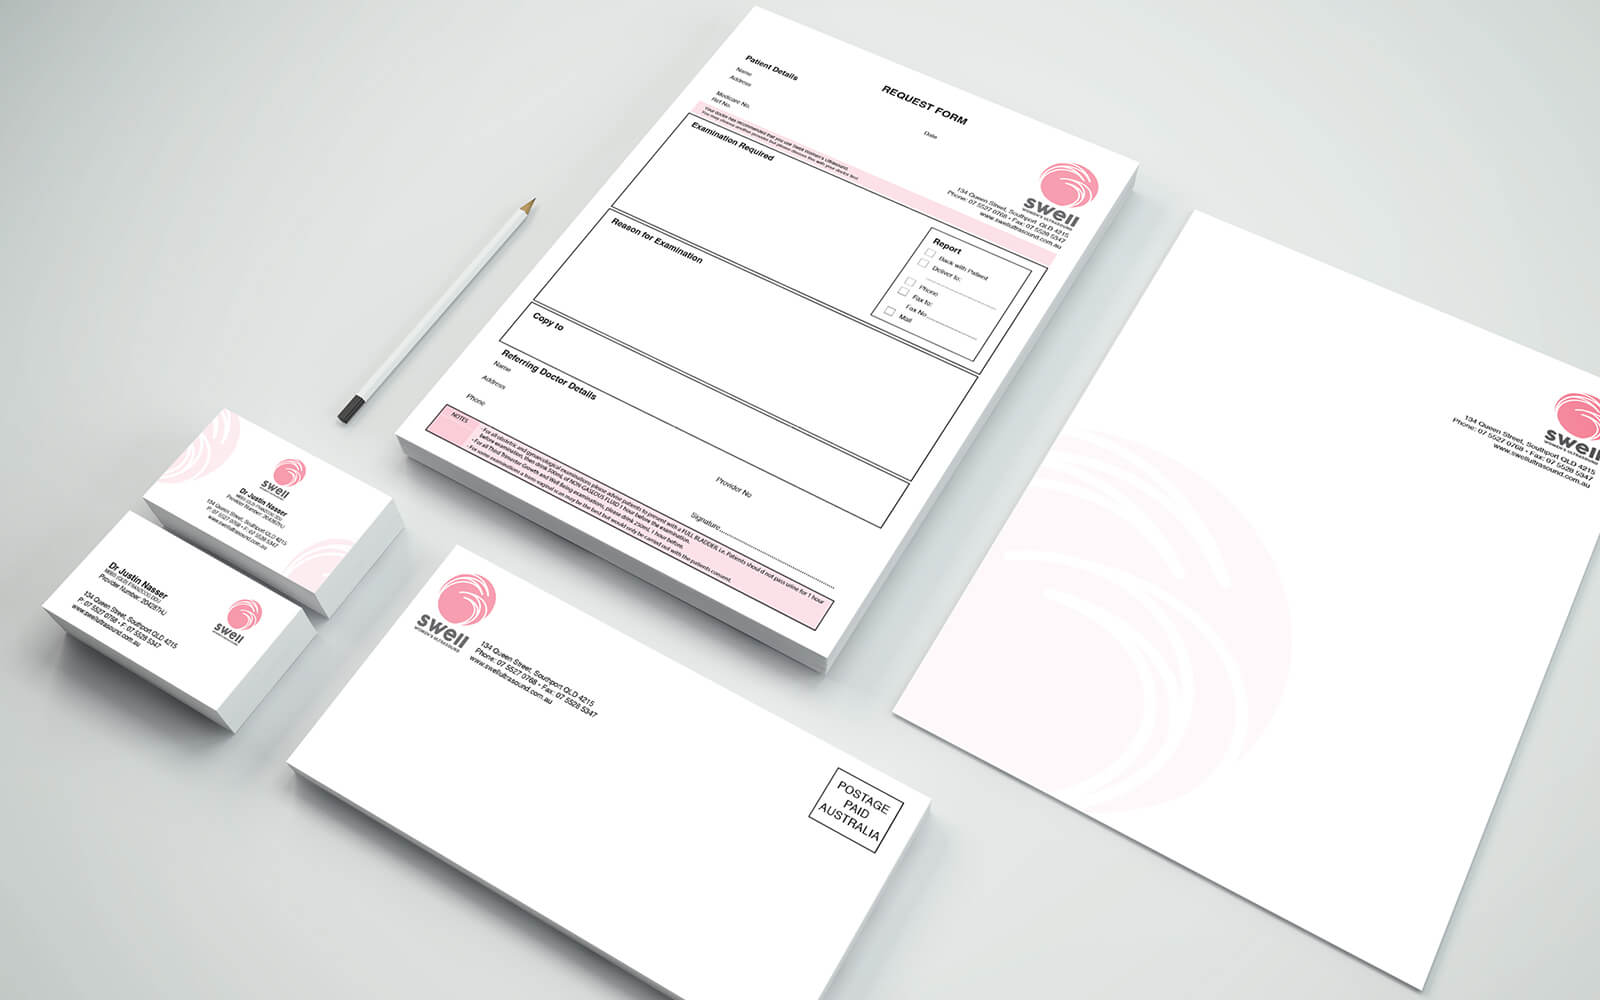 business cards, stationery graphic design service for clinic by freelance designer metrodesign bexley kogarah sydney